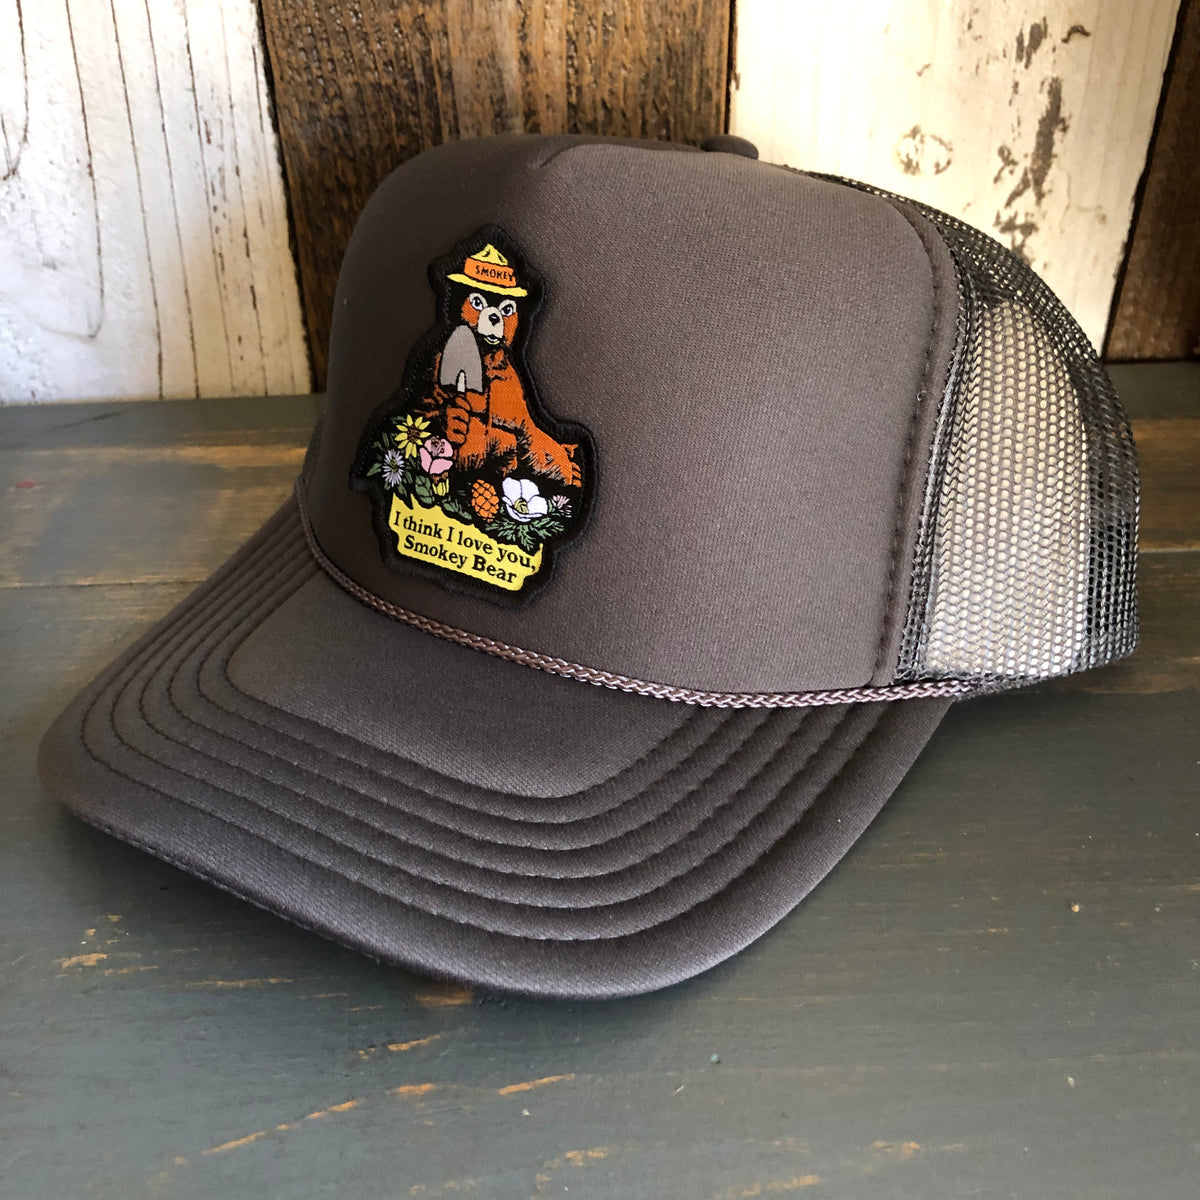 Smokey Bear Hat Patch Trucker Black/Grey